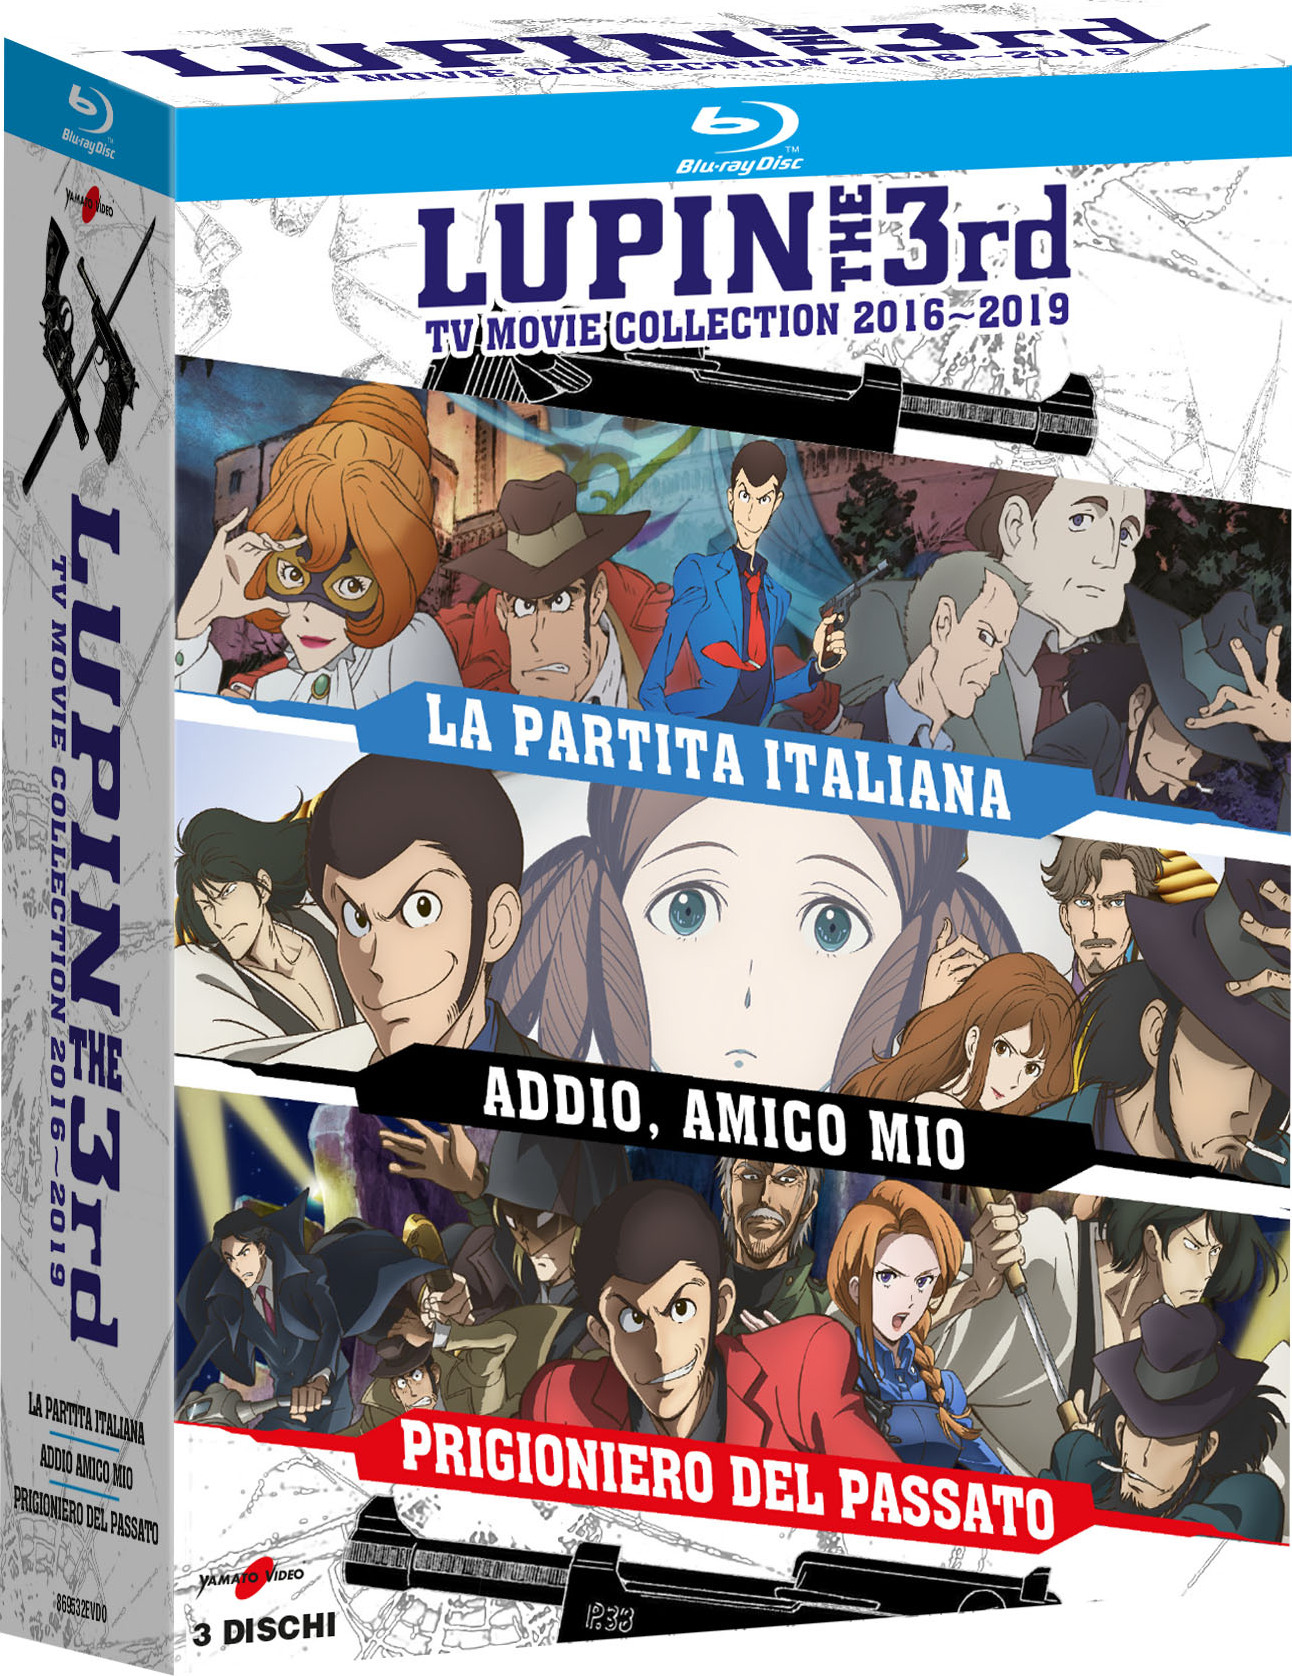 Lupin III - Tv Movie Collection 2016-2019 Blu-ray (La Partita